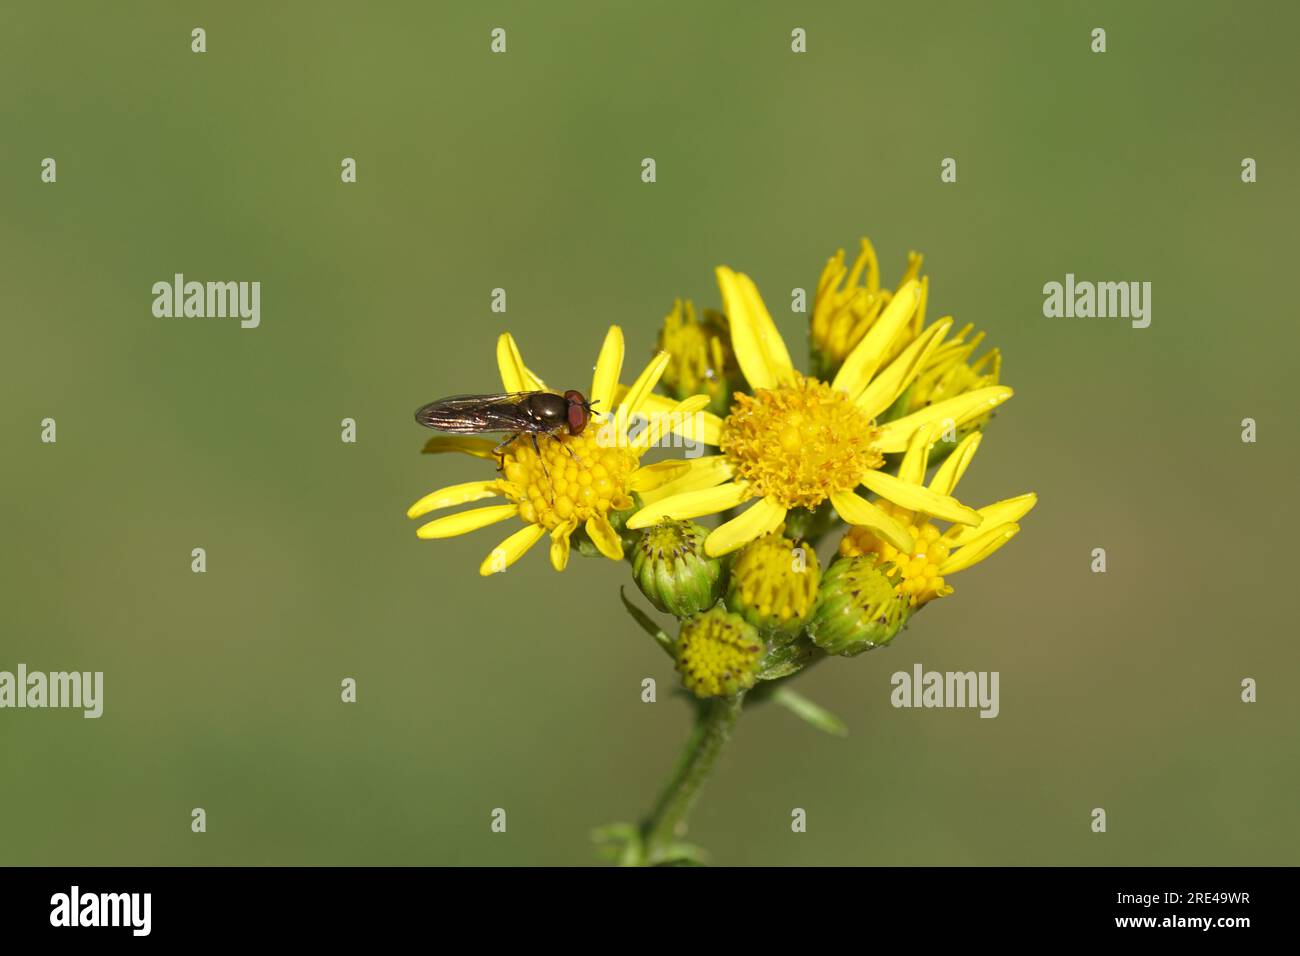 Male hoverfly Platycheirus albimanus, family hoverflies (Syrphidae) on flowers of ragwort (Senecio jacobaea), family Asteraceae or Compositae. Summer, Stock Photo